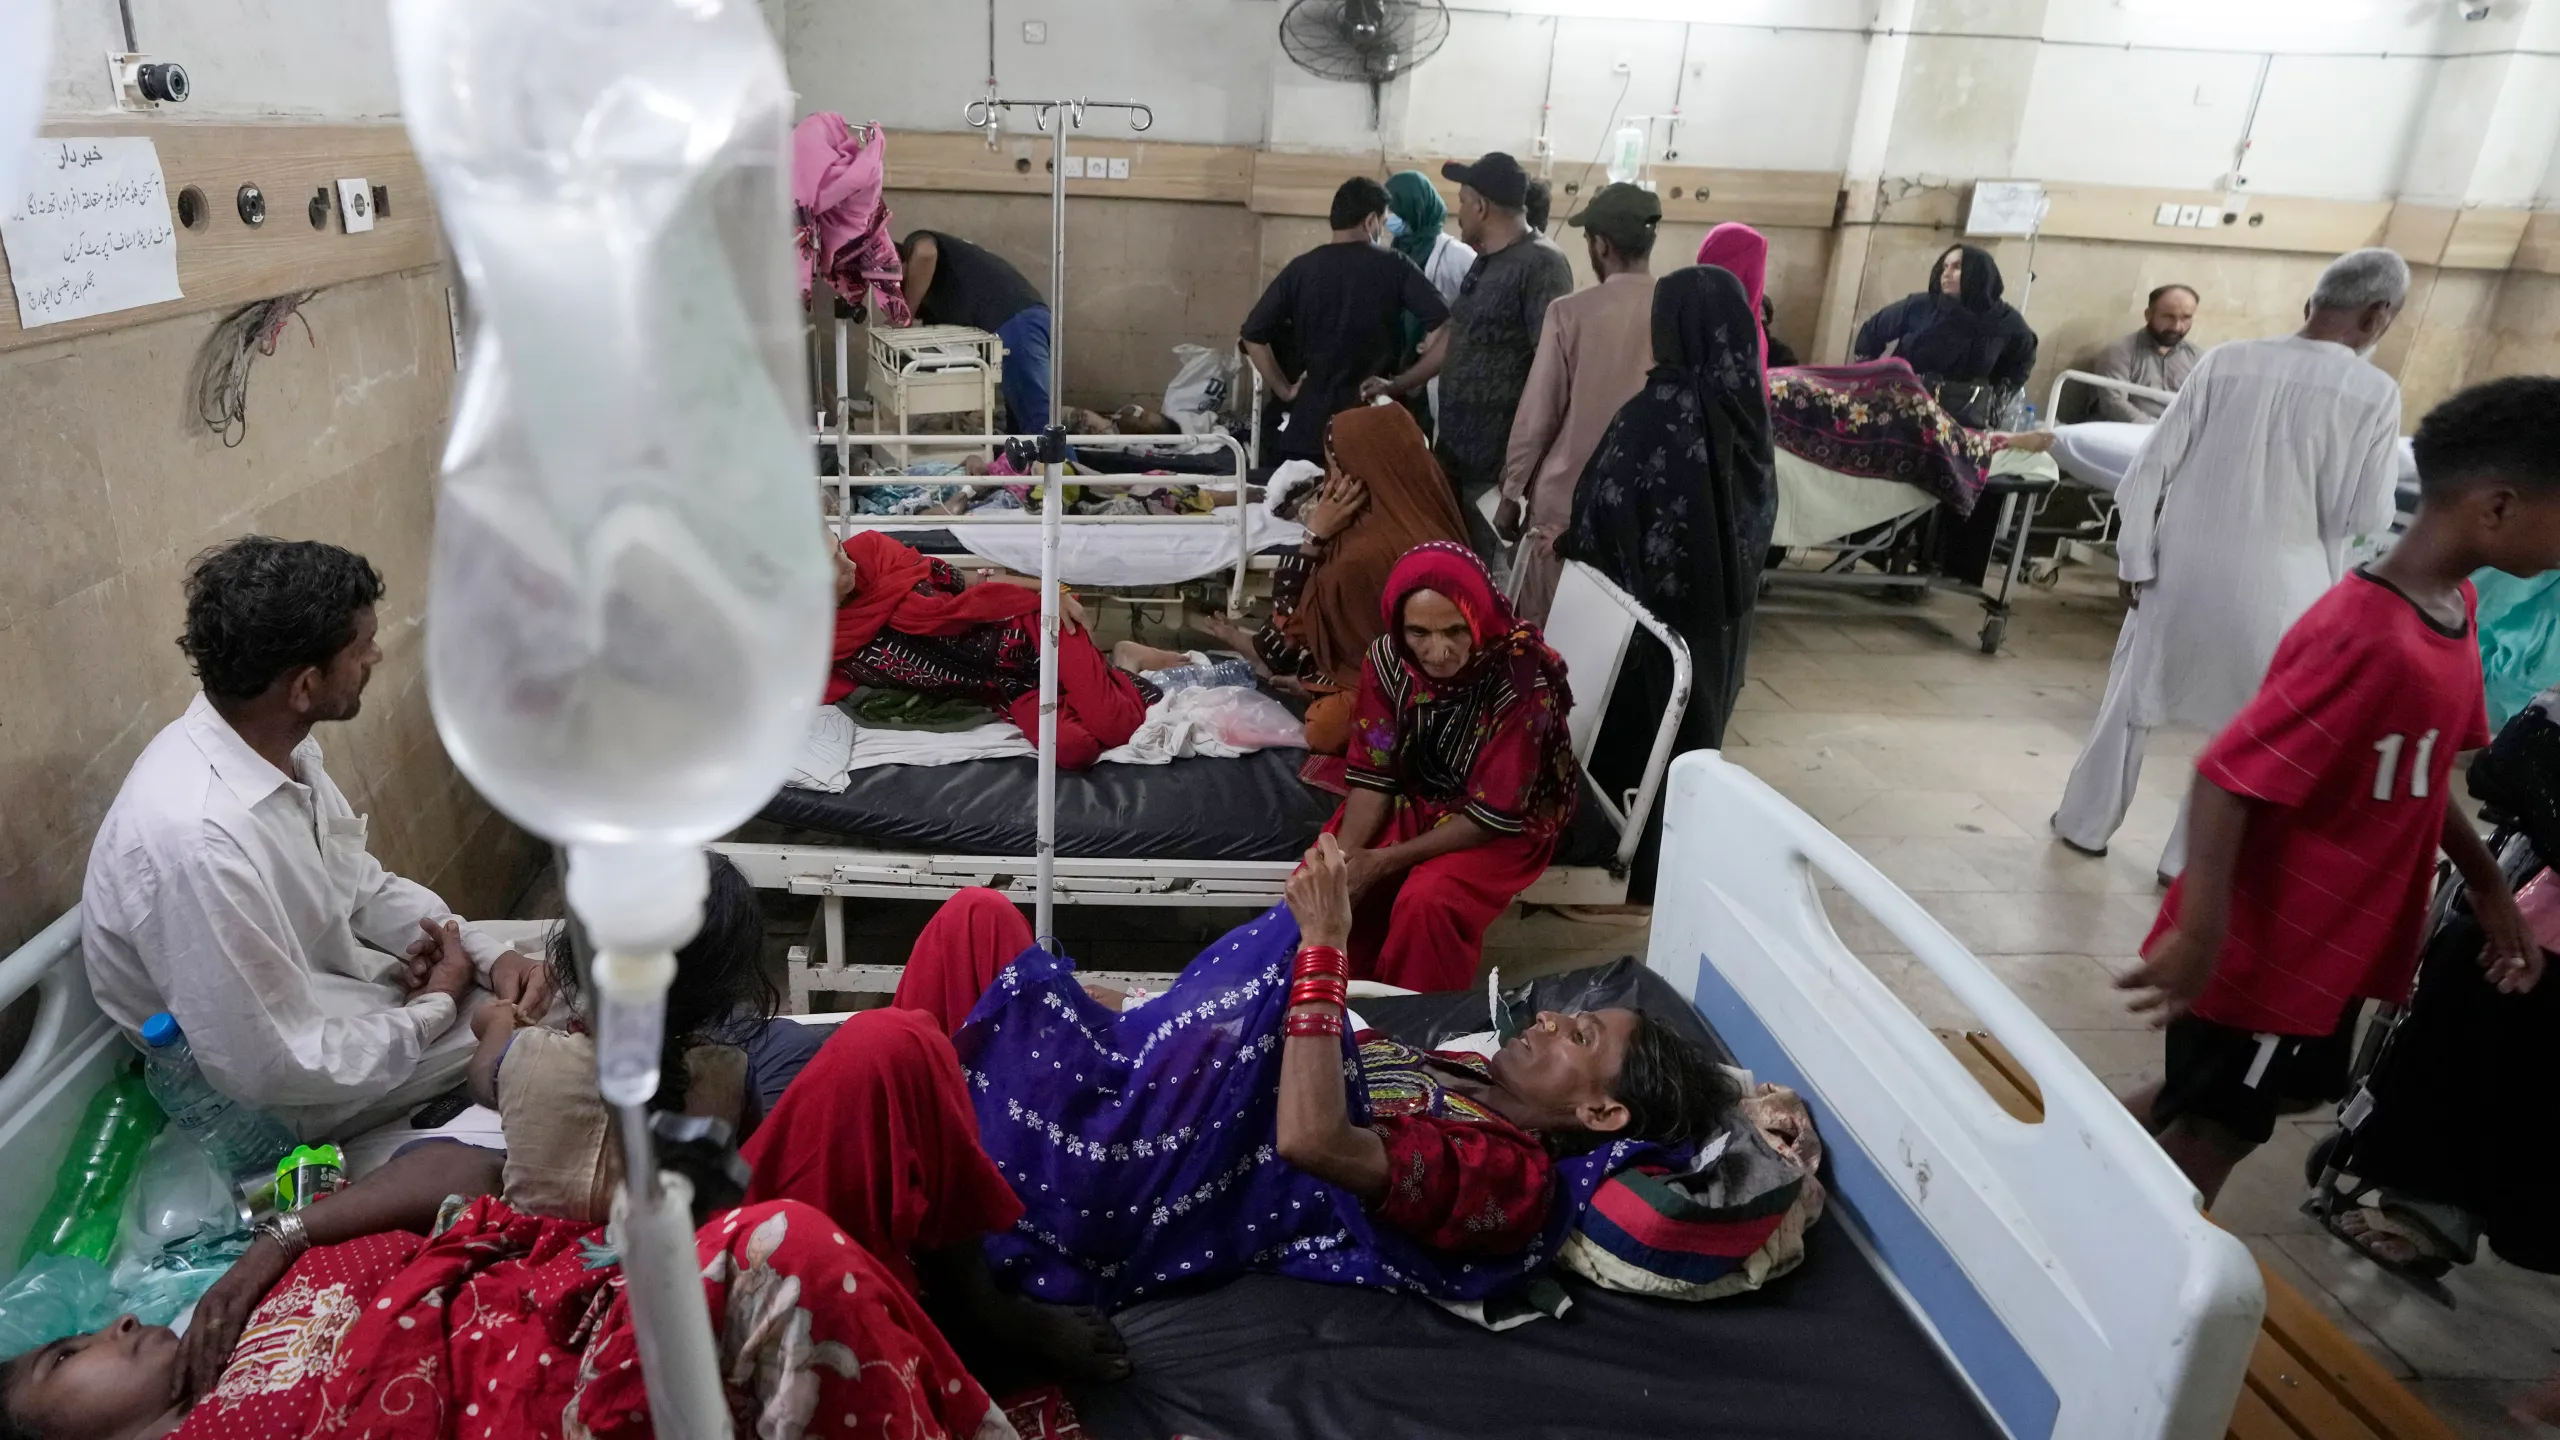 25 killed, thousands in hospital due to intense heatwave in Pakistan’s Karachi